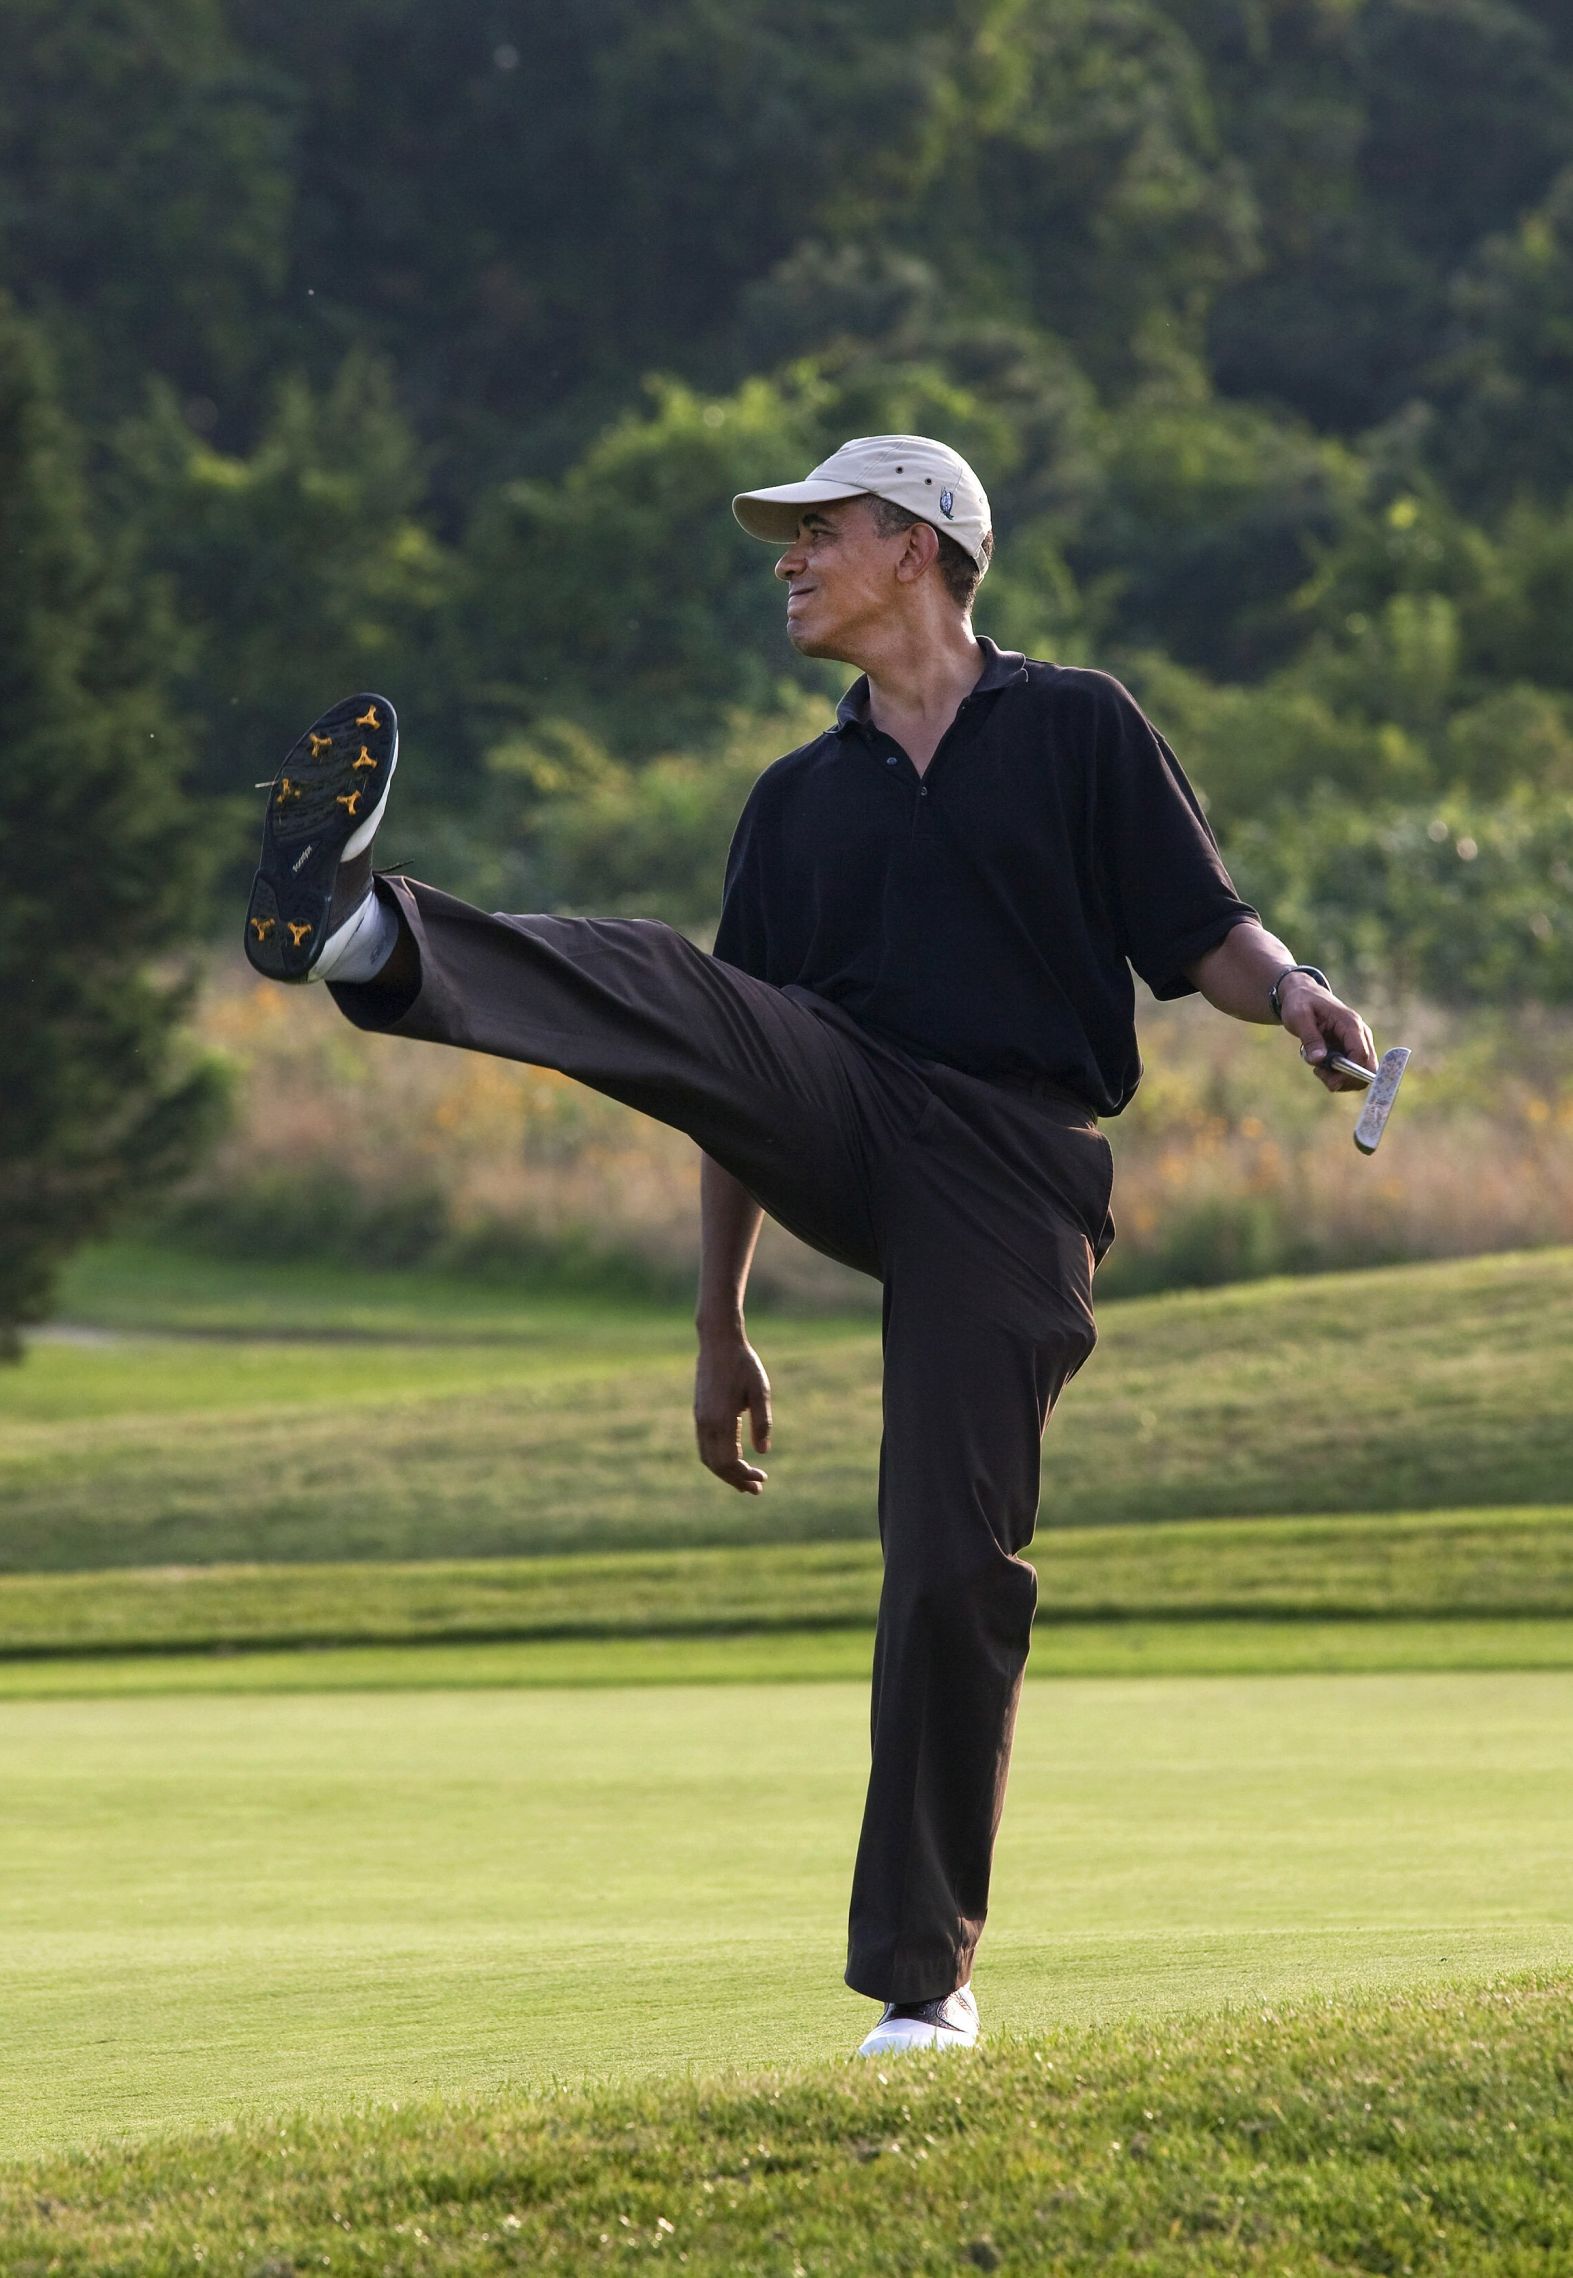 High Quality Obama hind leg Blank Meme Template